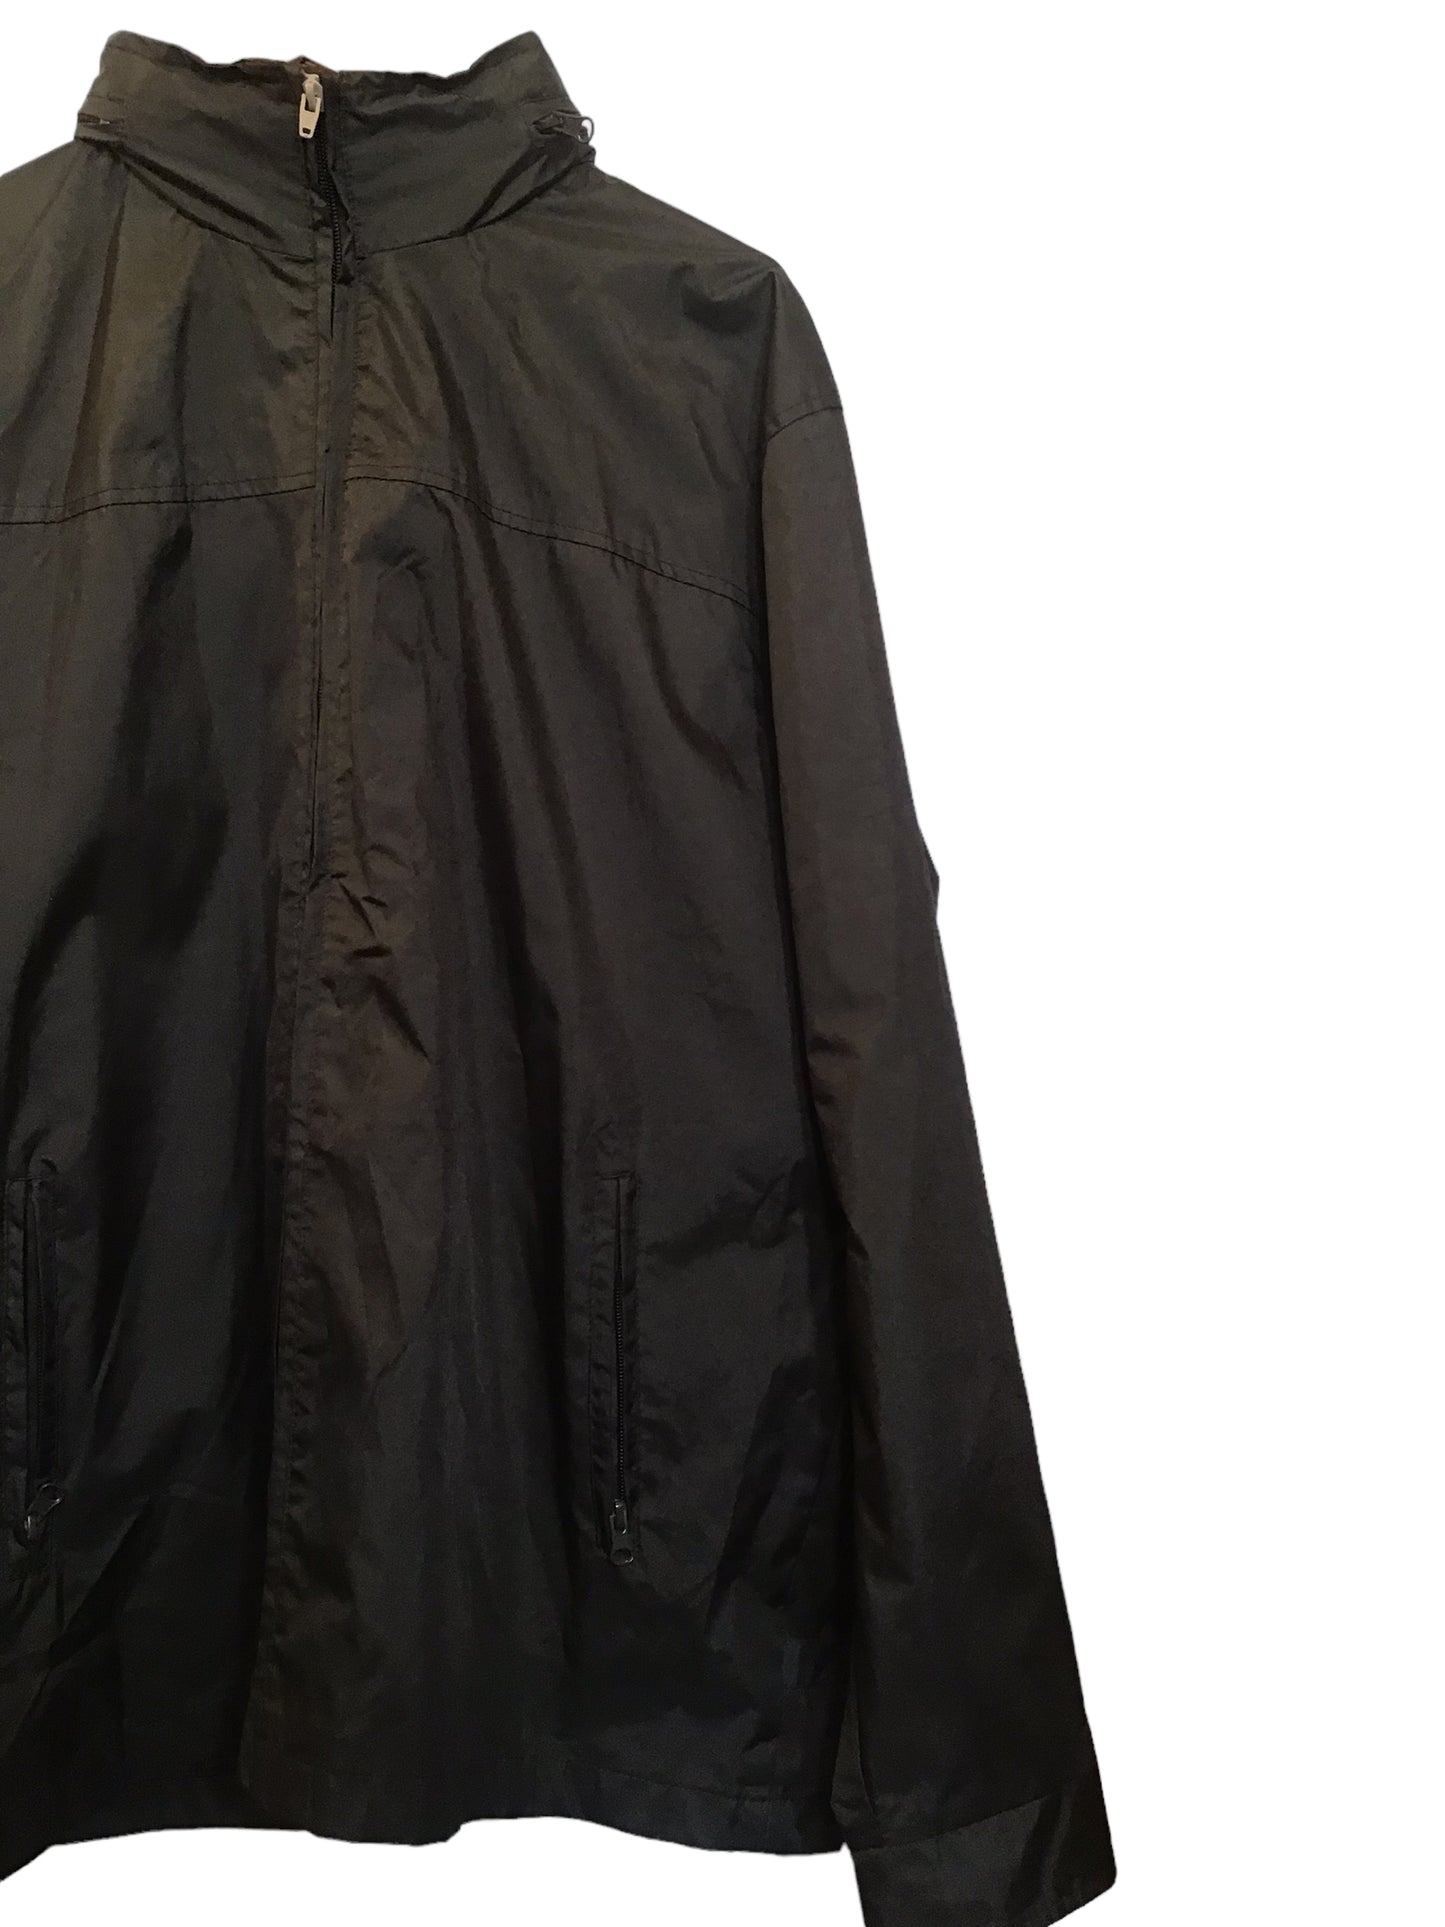 Fernleigh Coat (Size L)